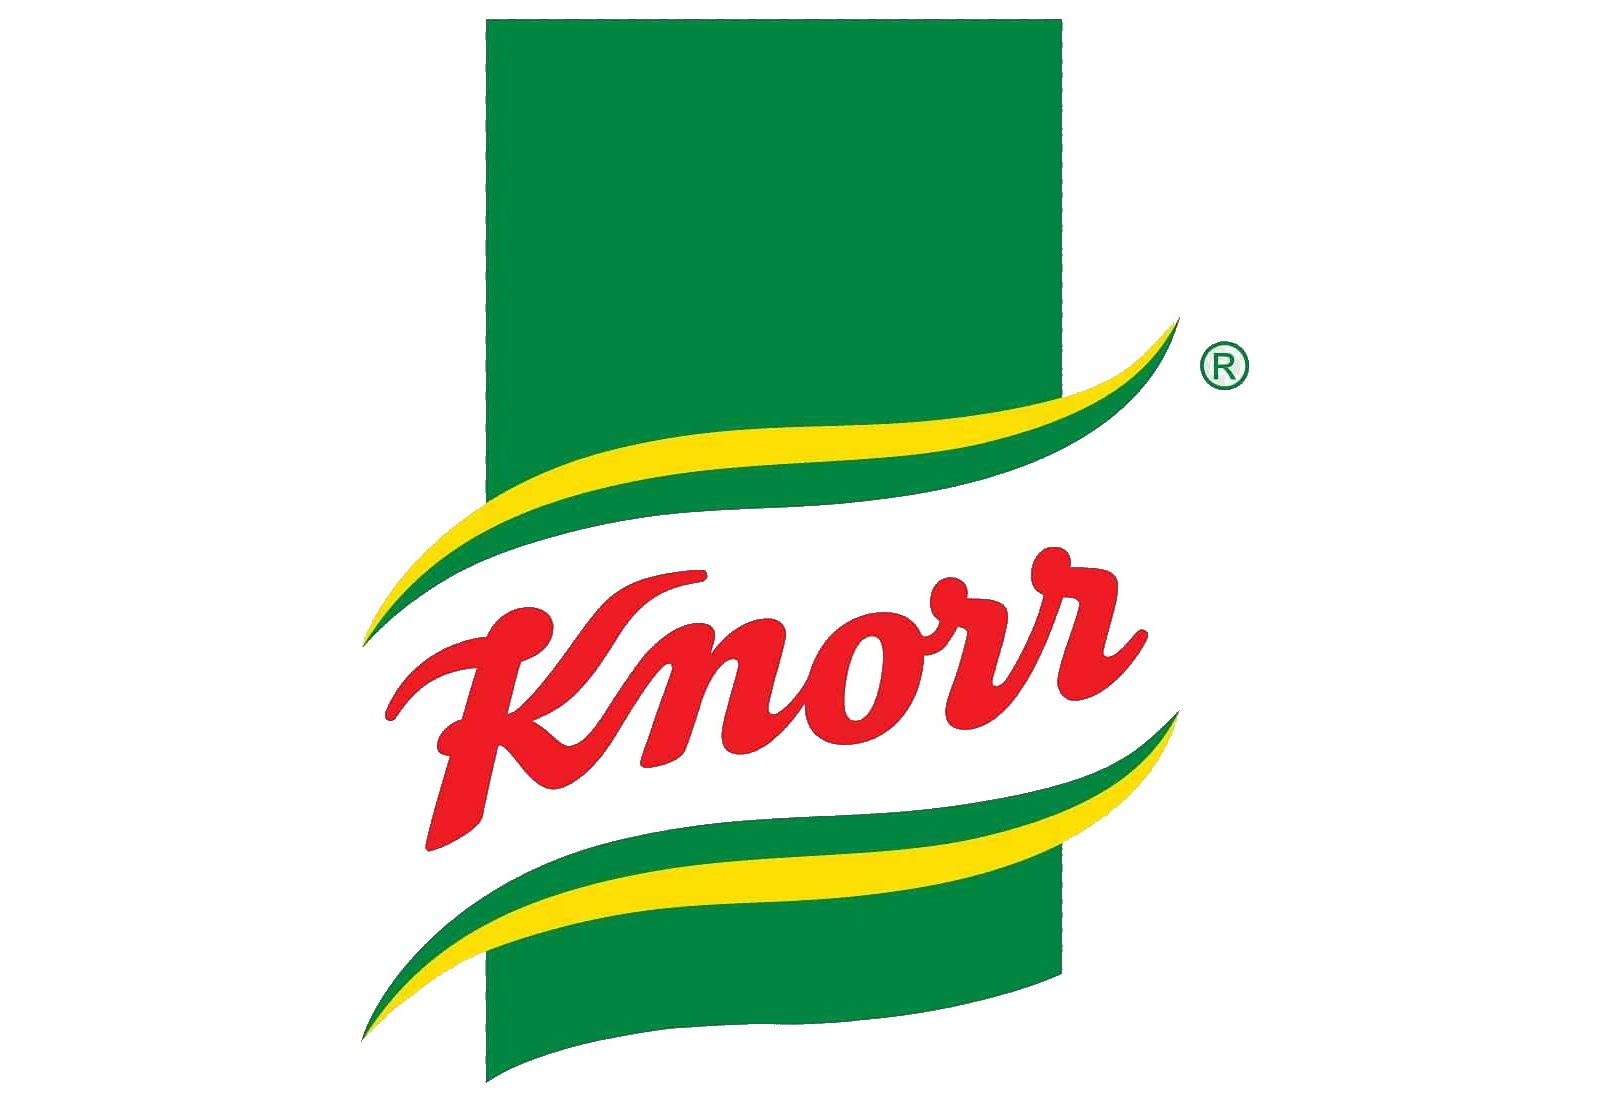 Knorr Logo 2004